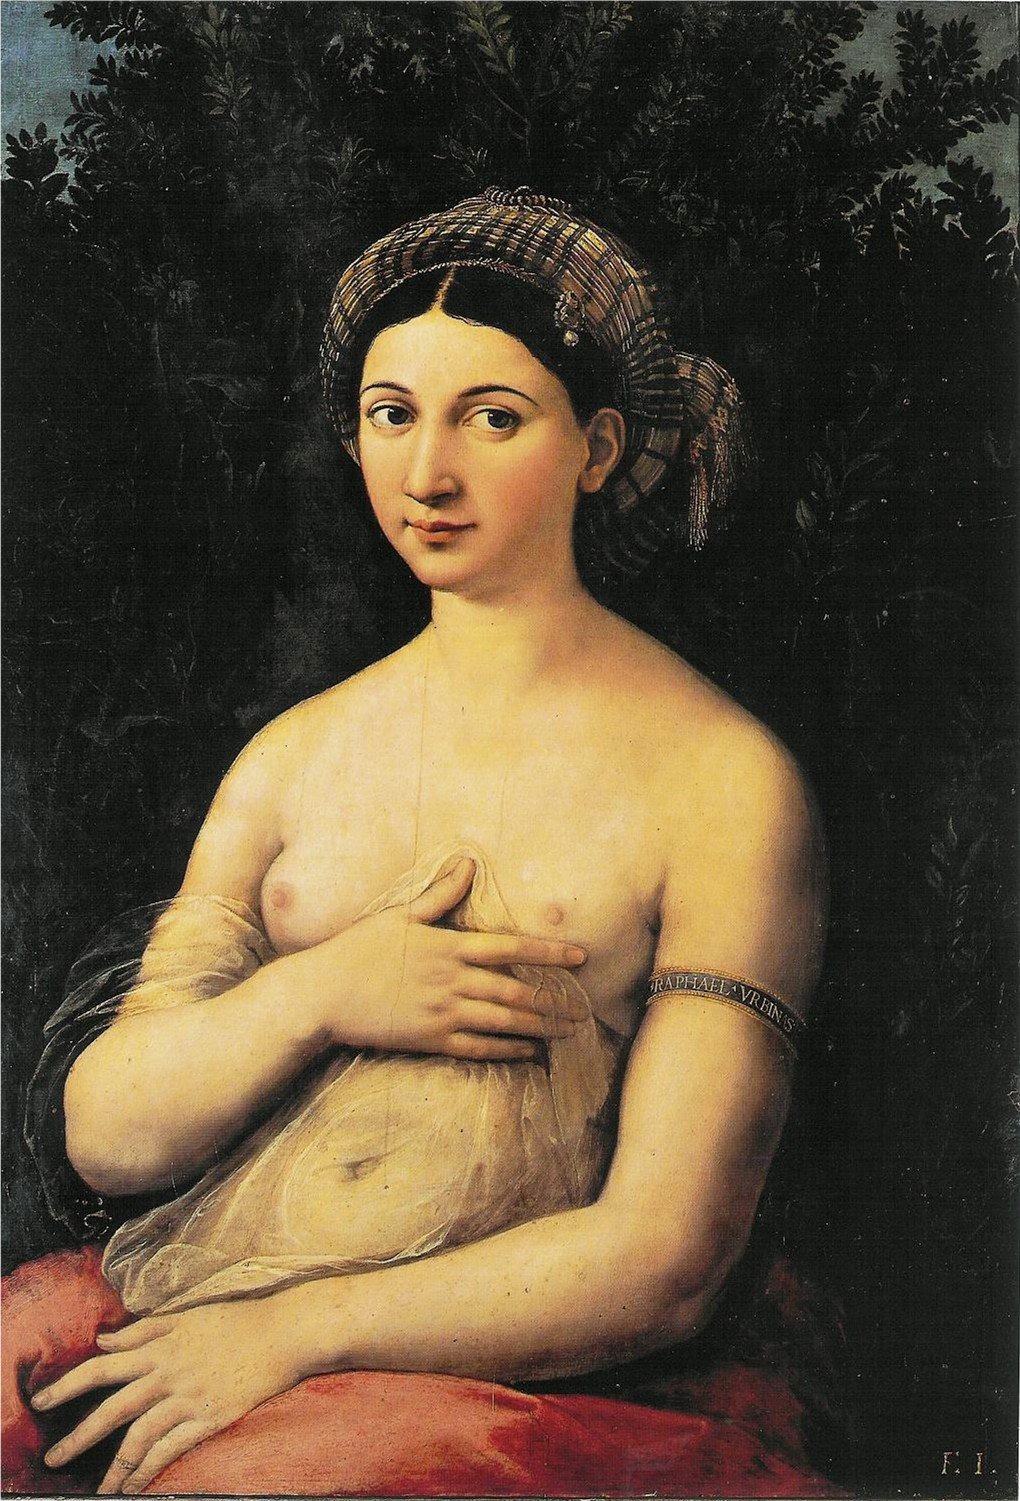 The 10 Best Artworks by Raphael, Seraphic Genius of the Renaissanceâ€”Ranked